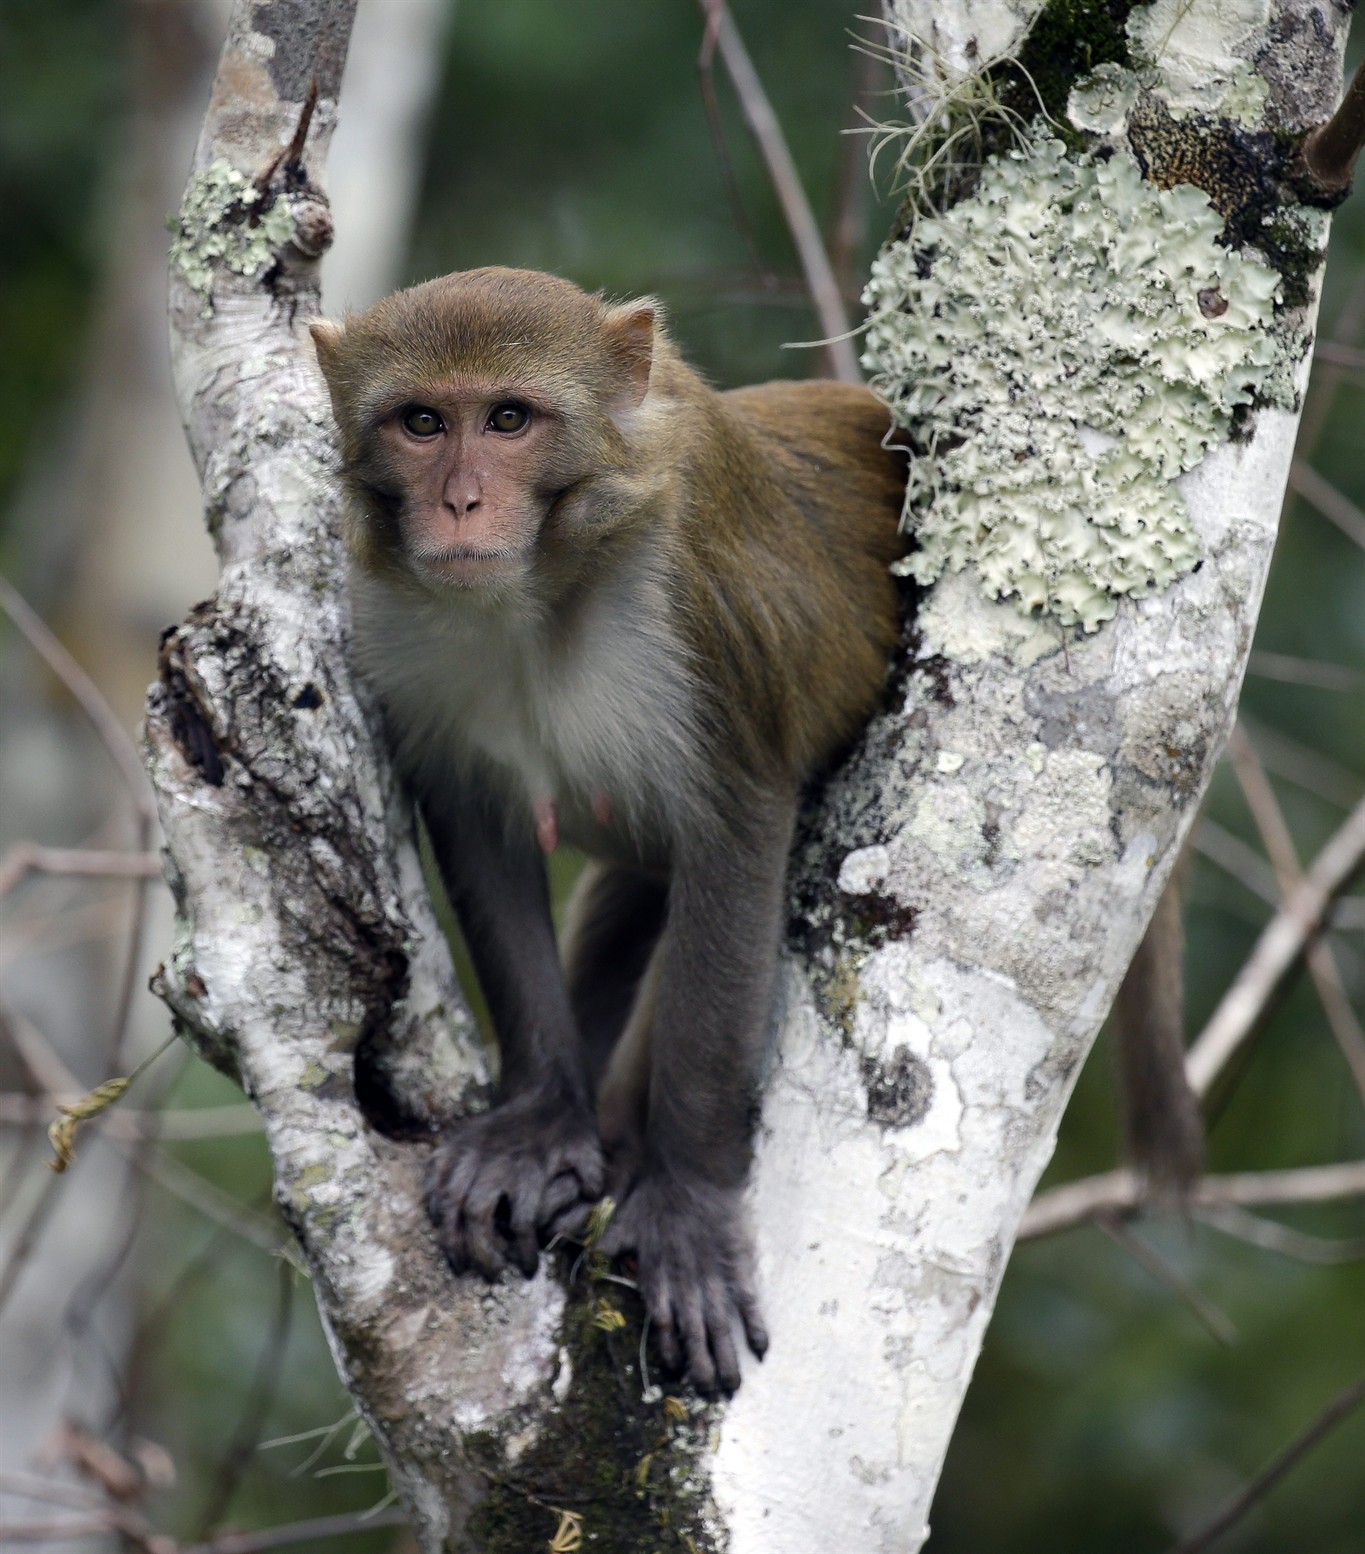 Florida wants to remove virus-excreting wild monkeys - 680 NEWS